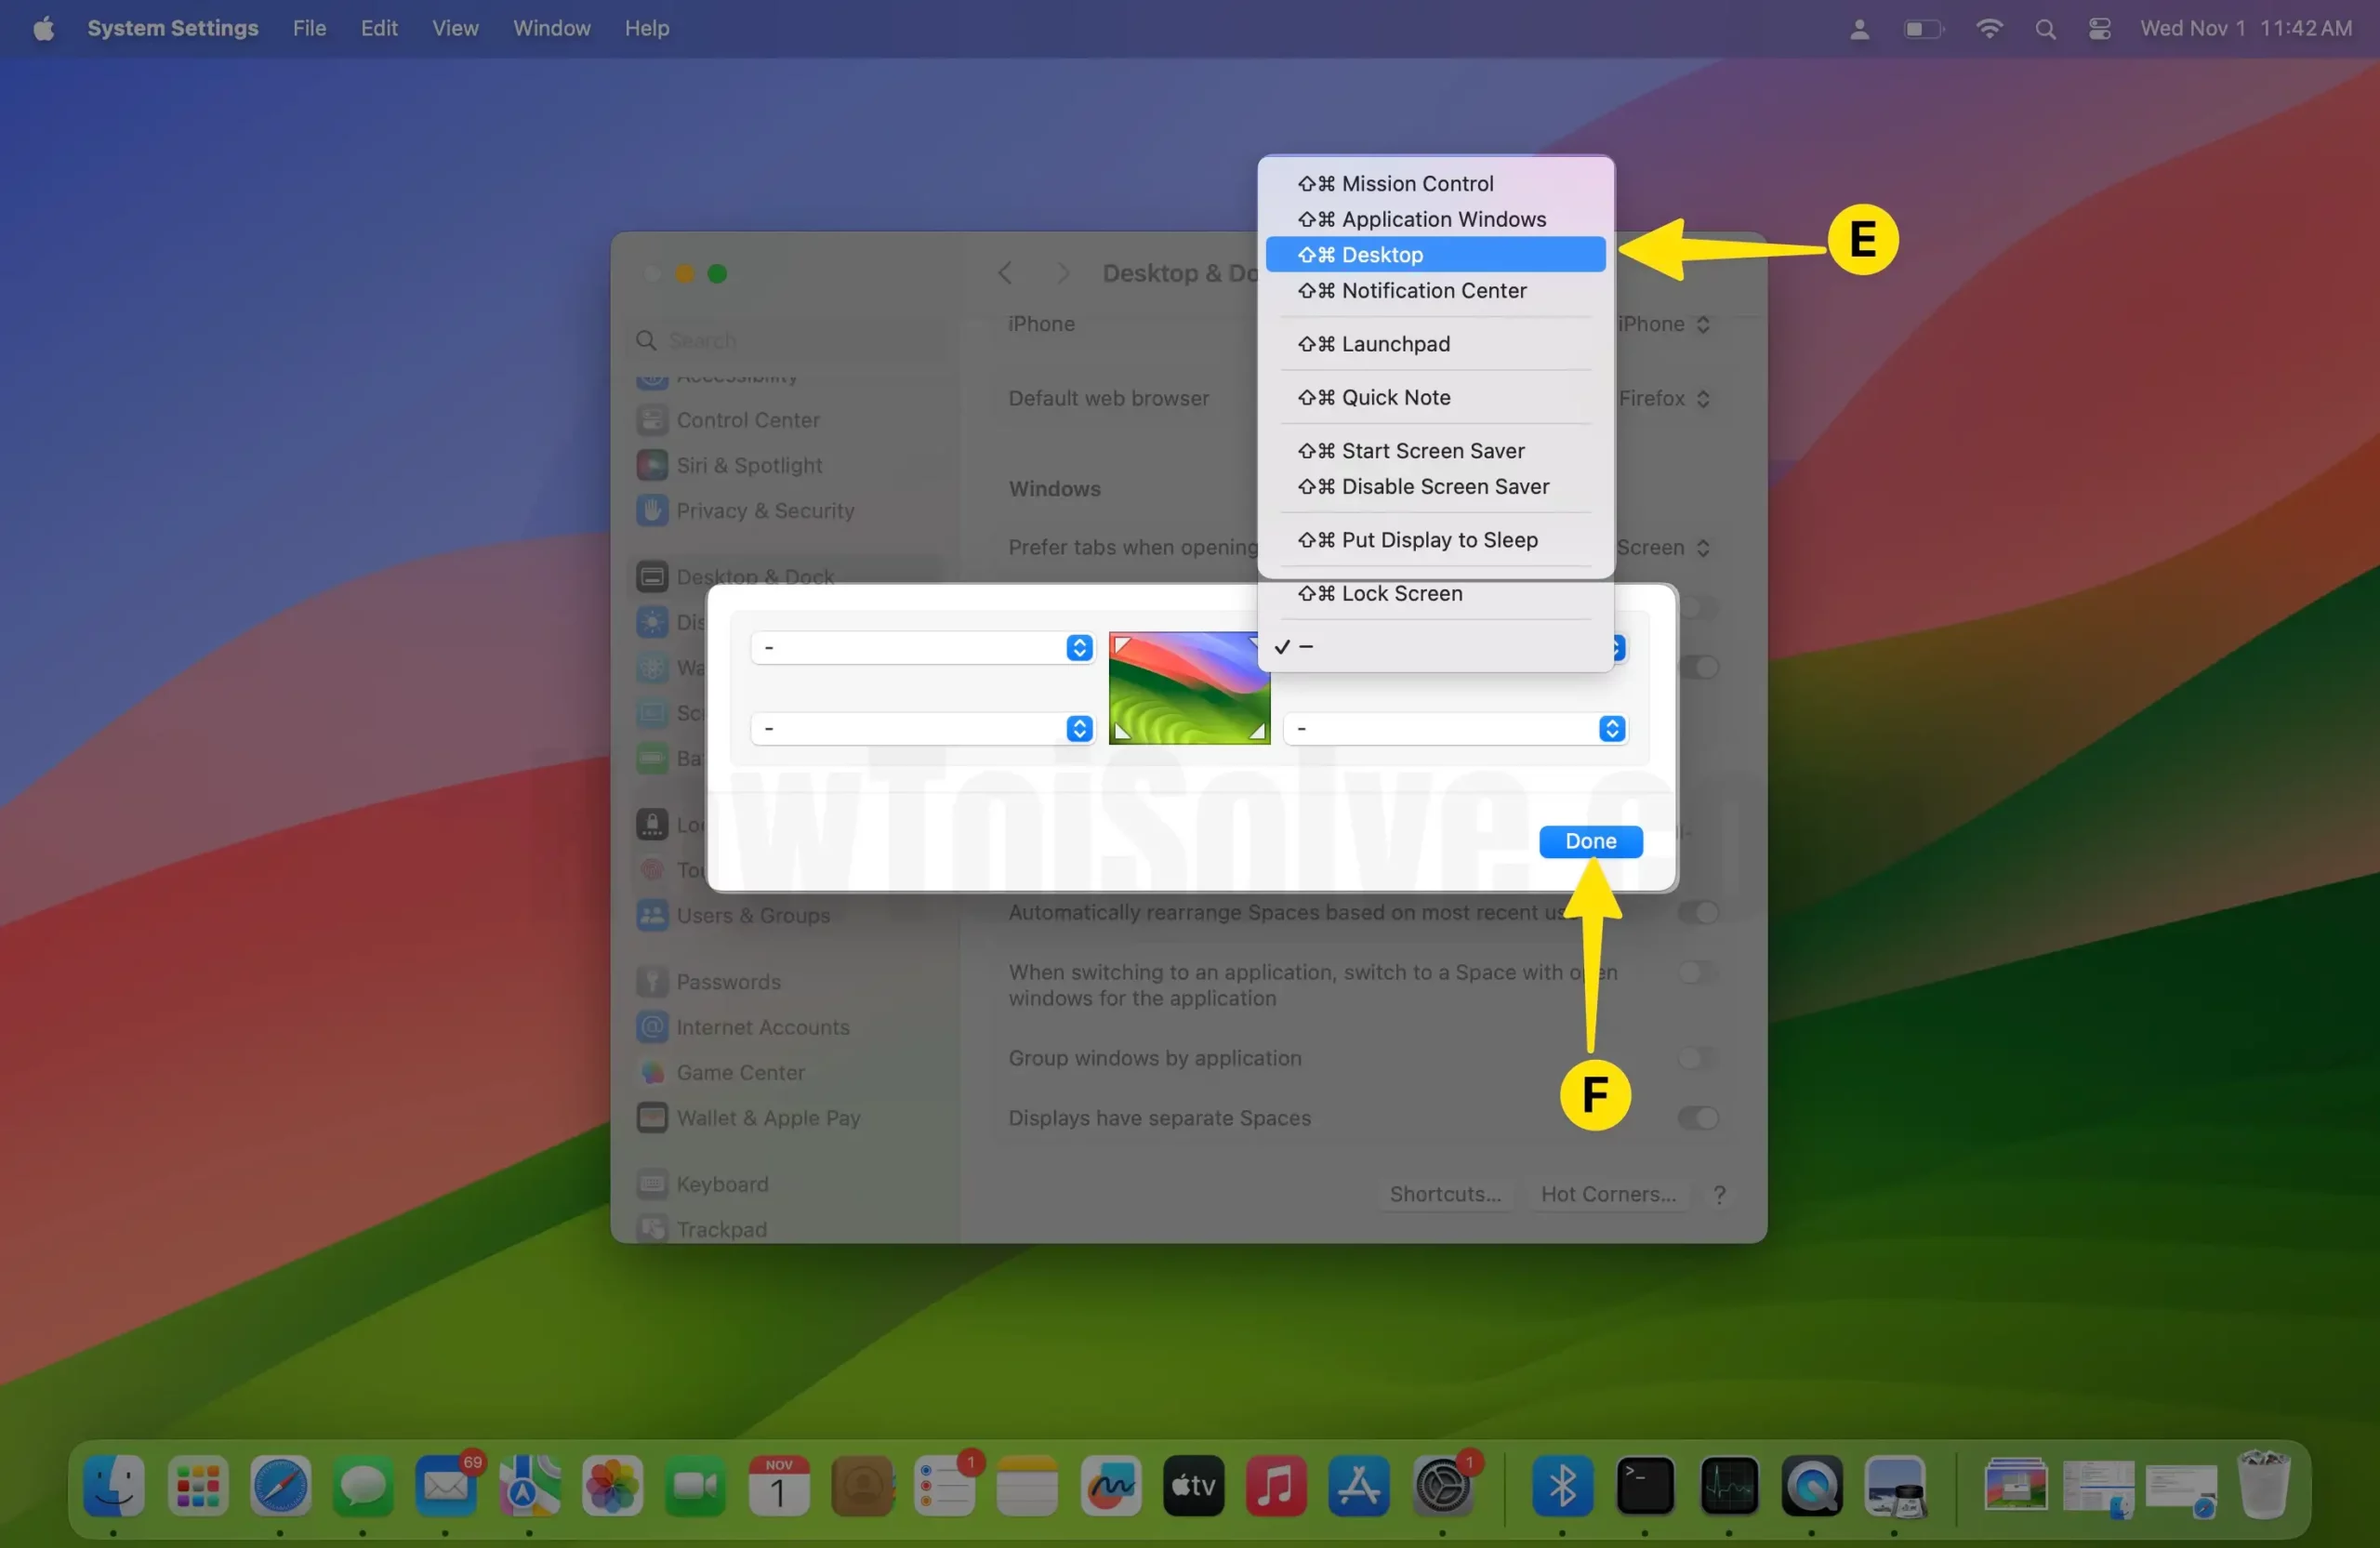 Re enable Hot Corners On Mac